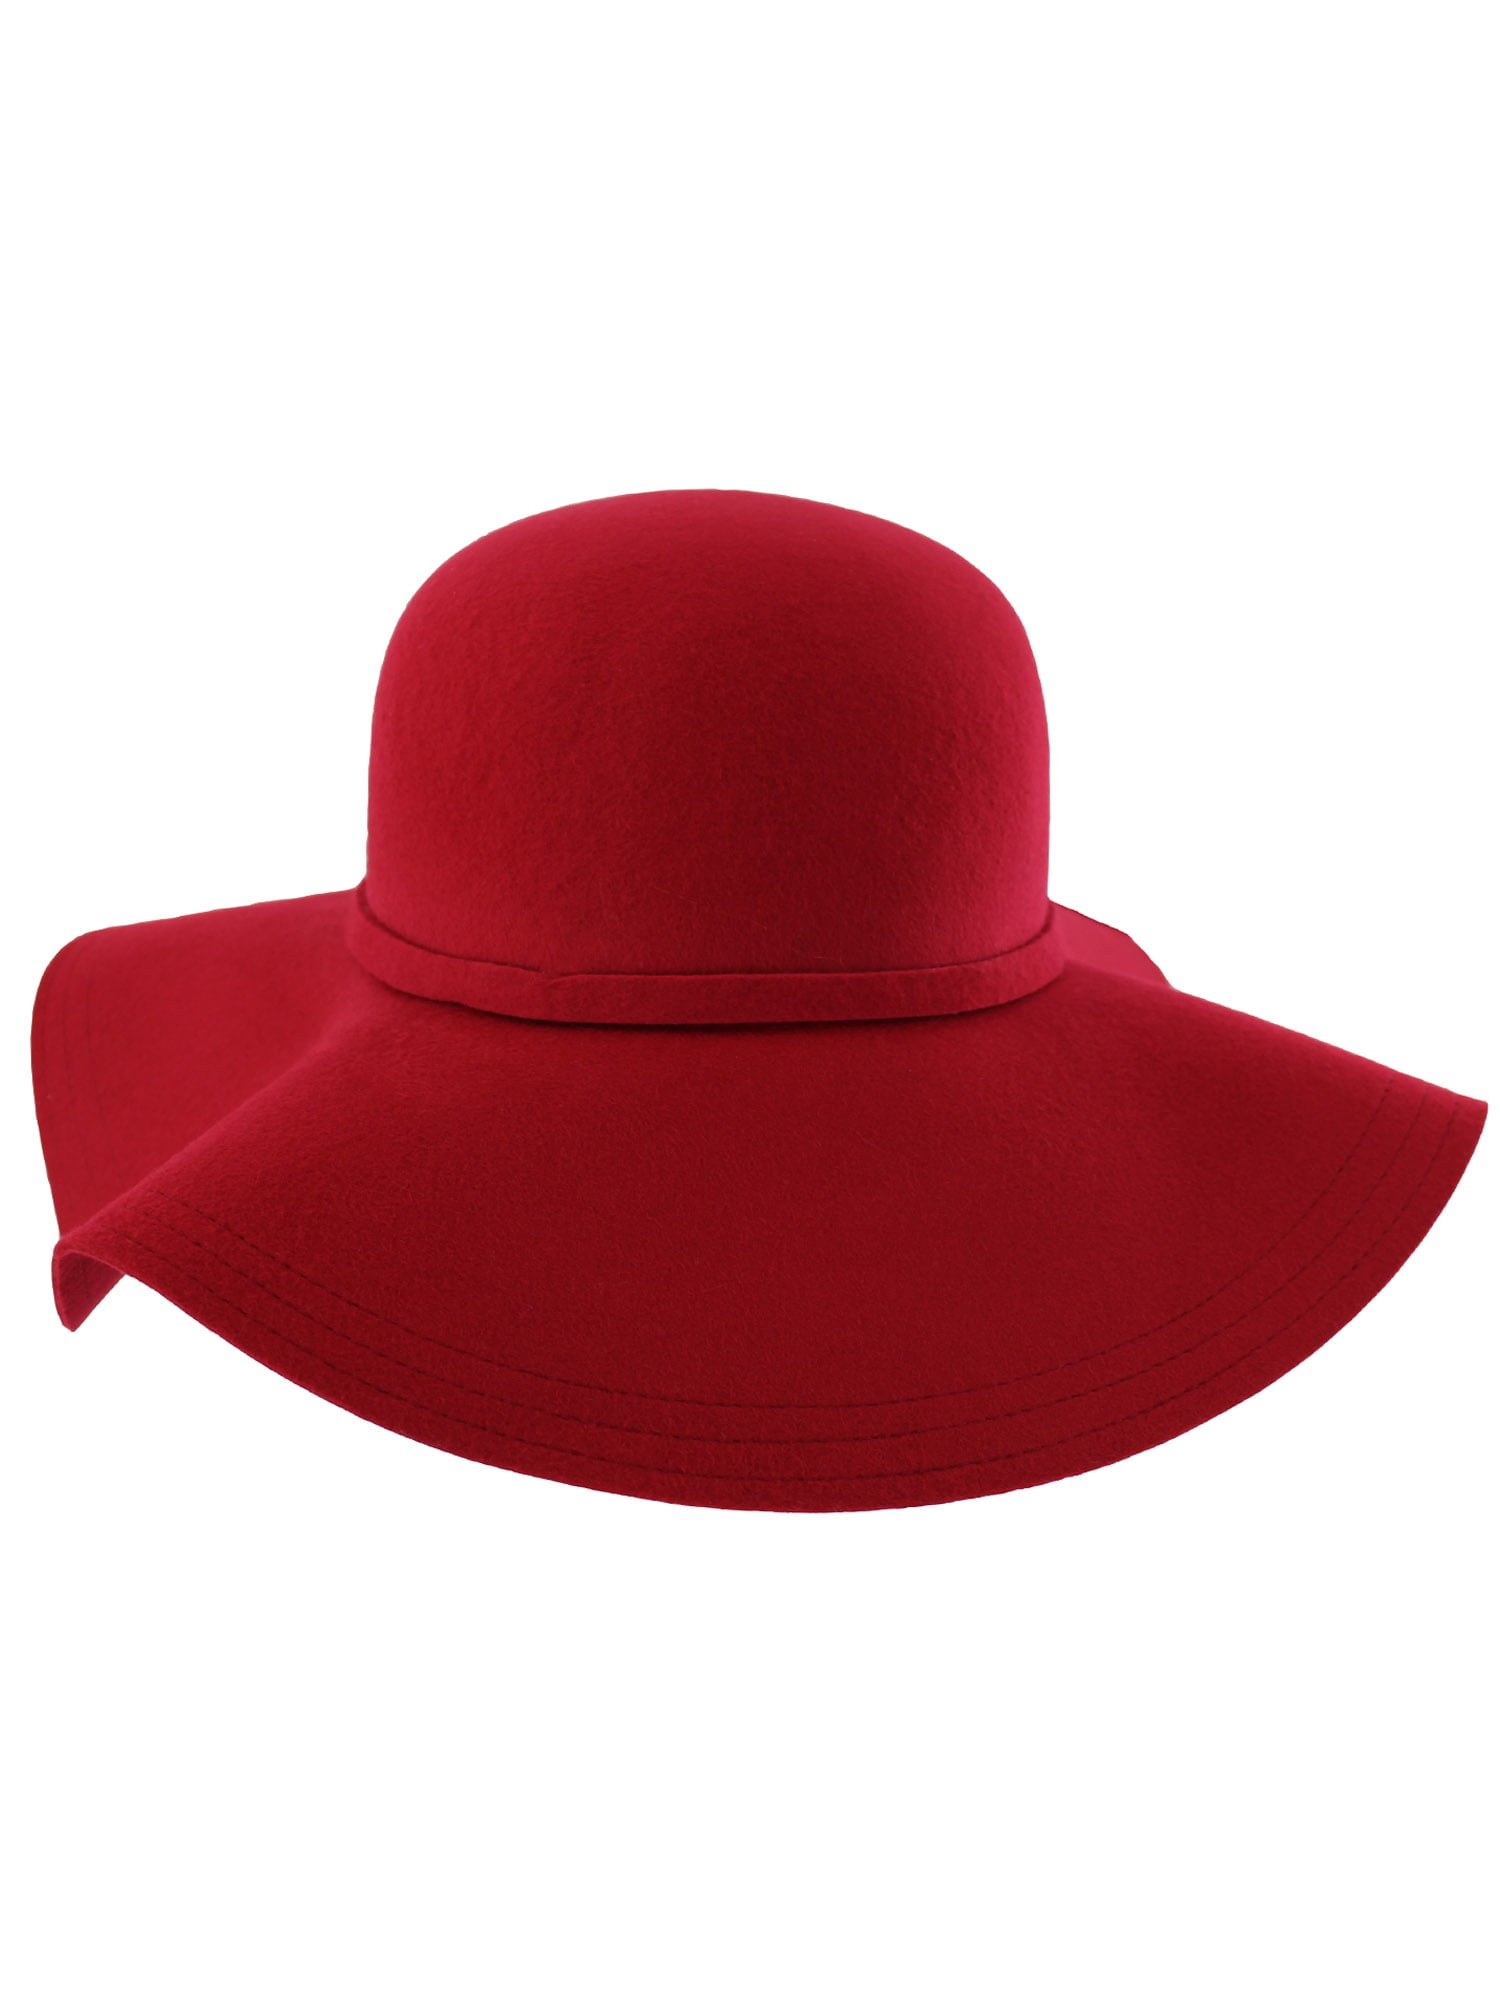 Red Wide Brimmed Wool Floppy Hat 